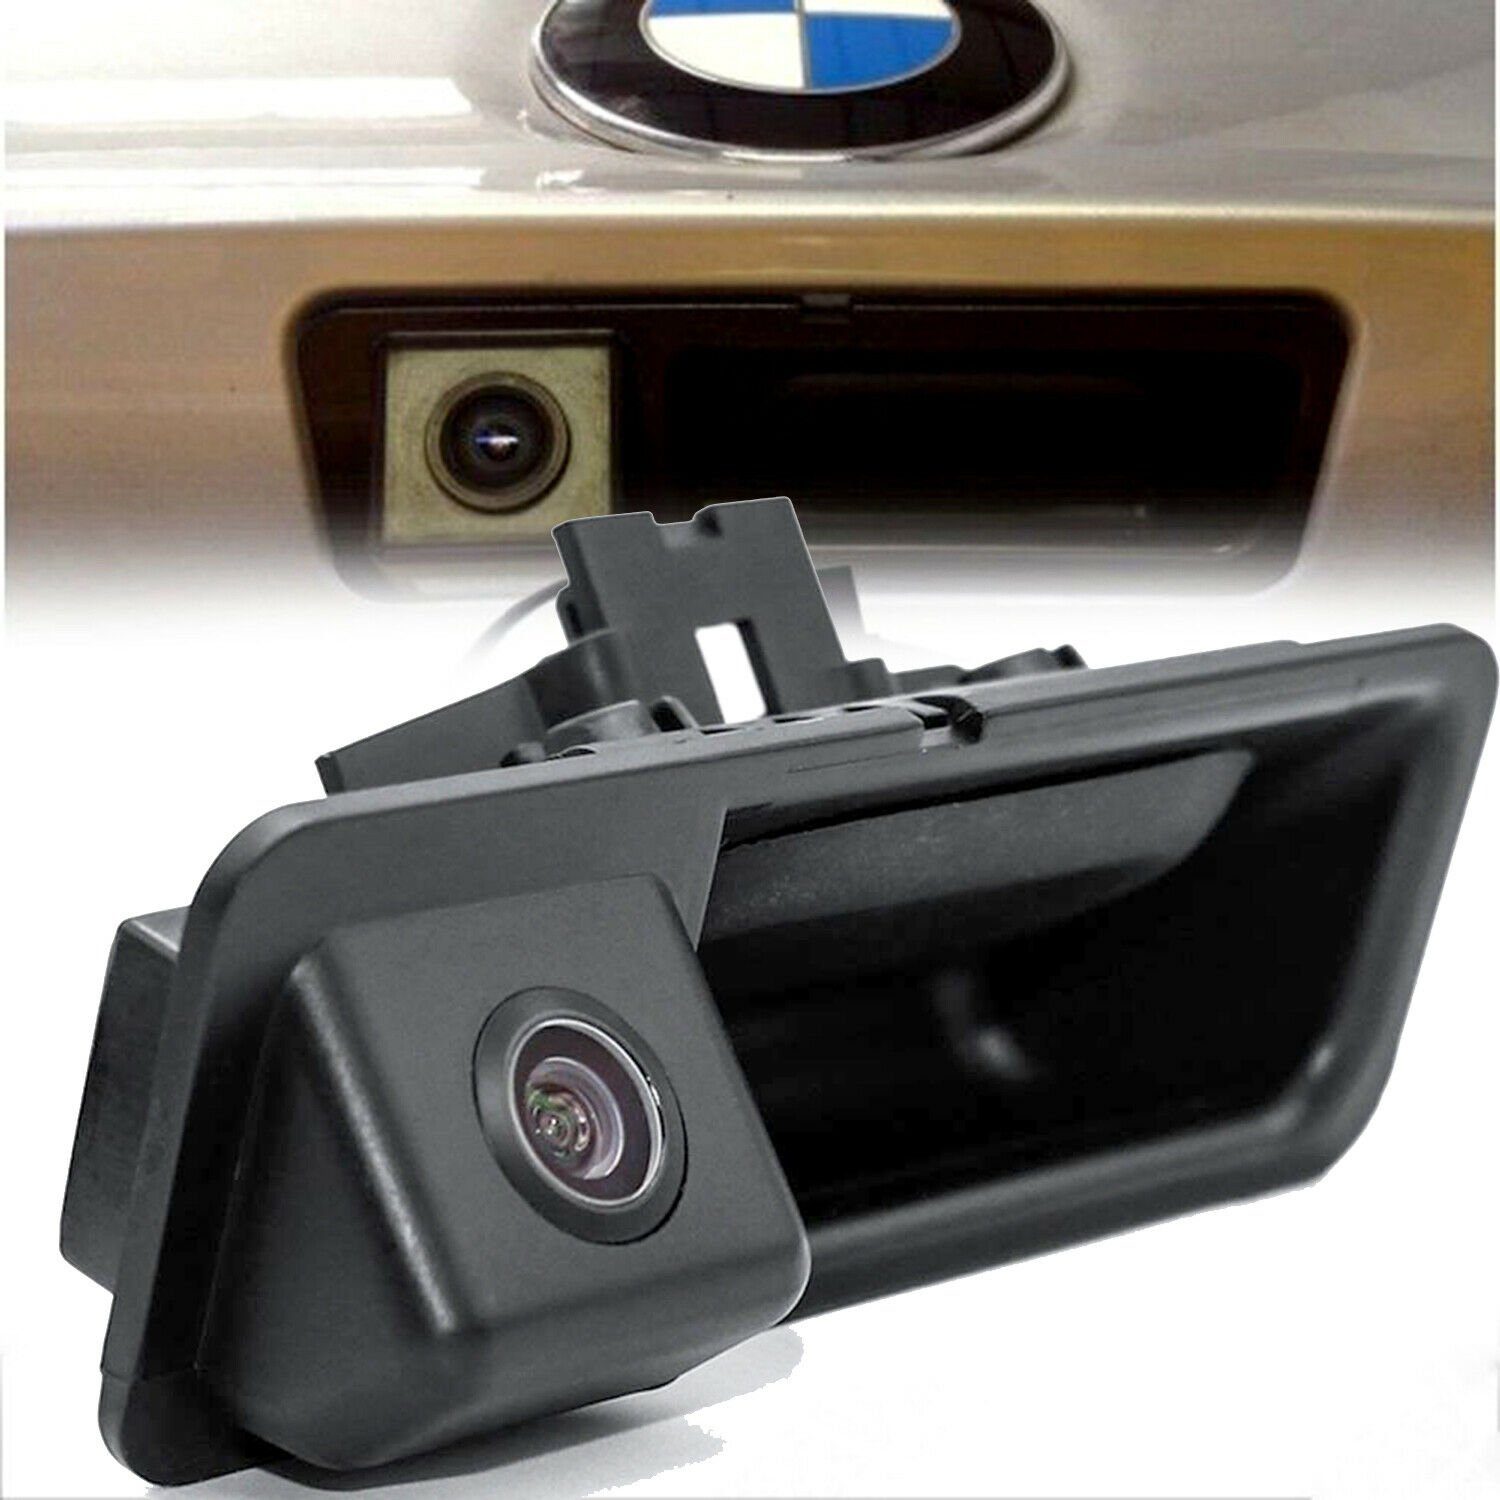 Koffergriff Rückfahrkamera E72 für im GABITECH E61 E71 E70 E60 Rückfahrkamera BMW integriert